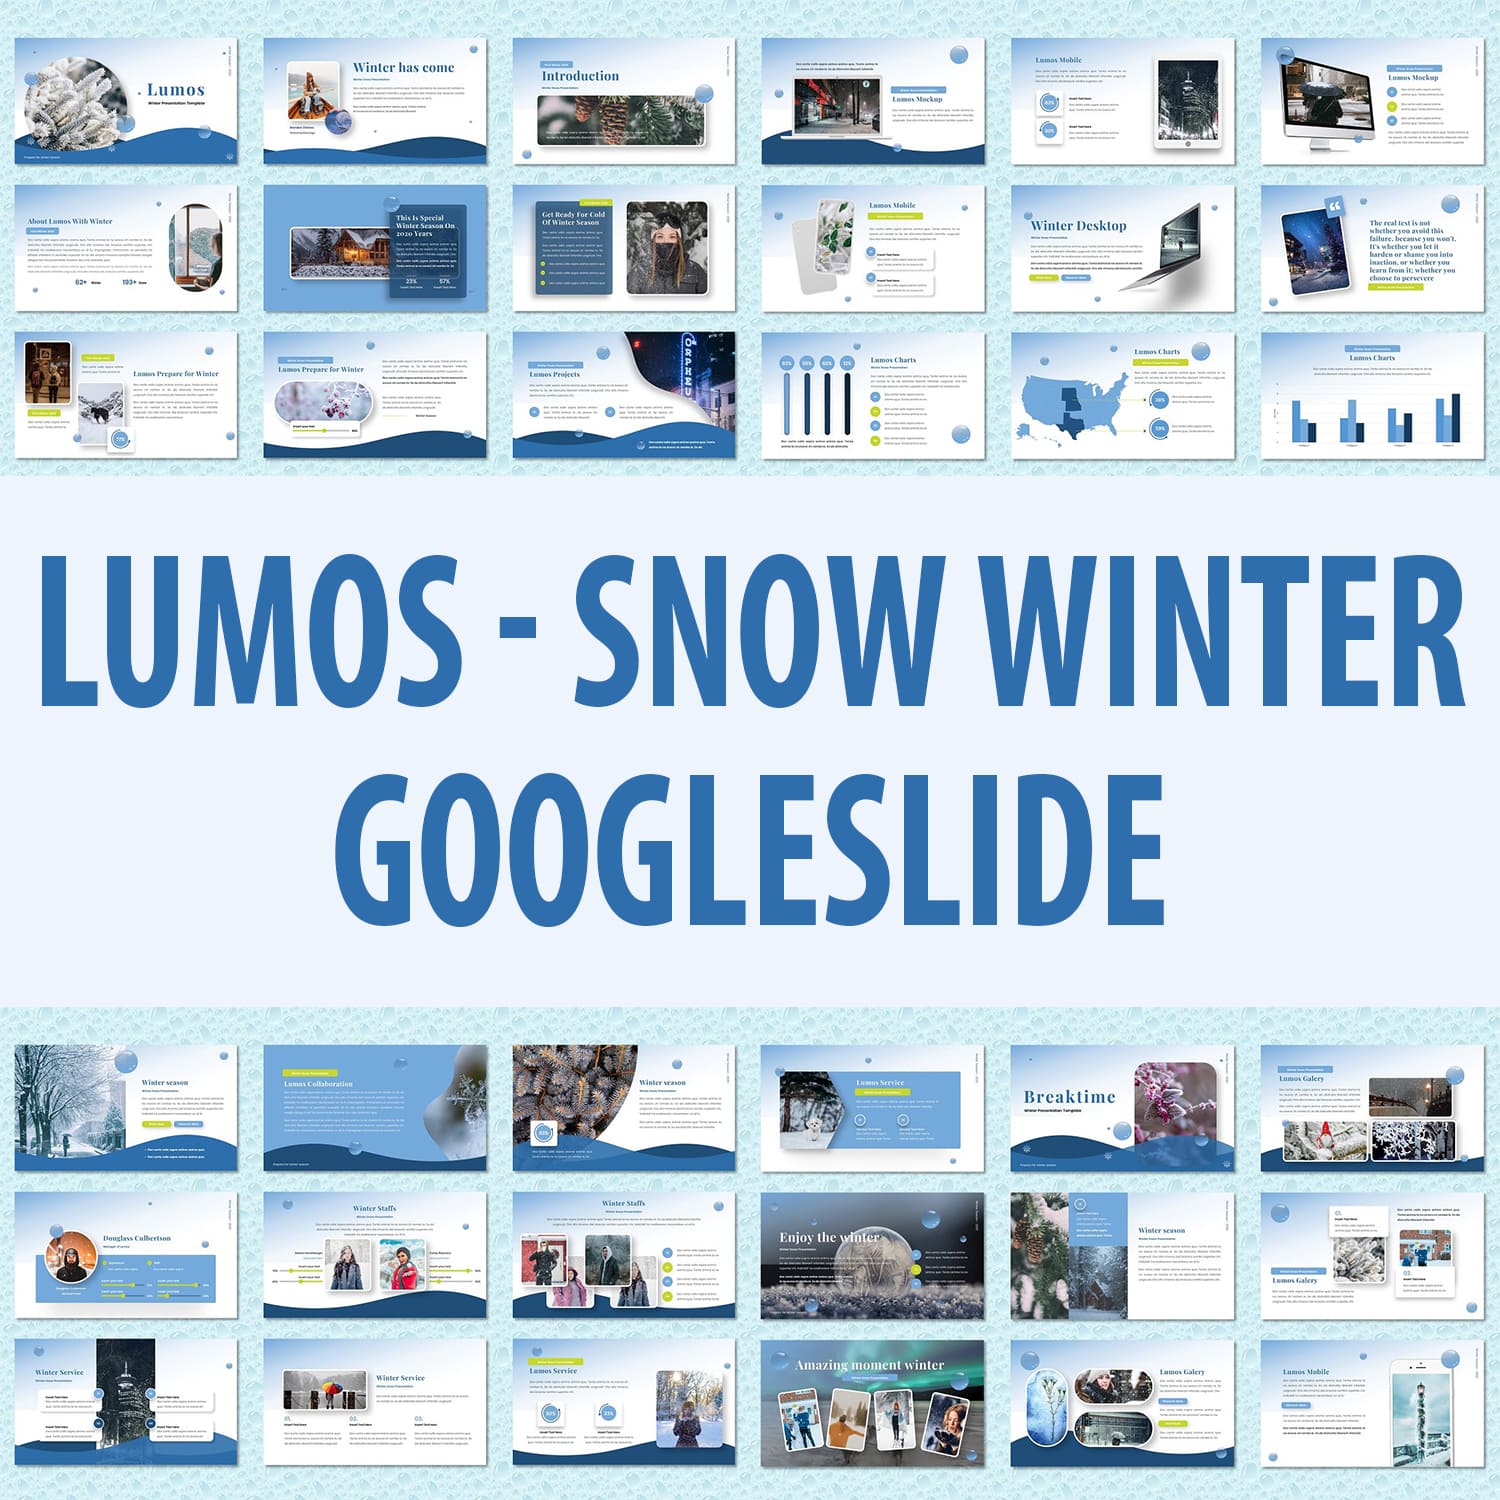 Lumos - Snow Winter Googleslide cover.